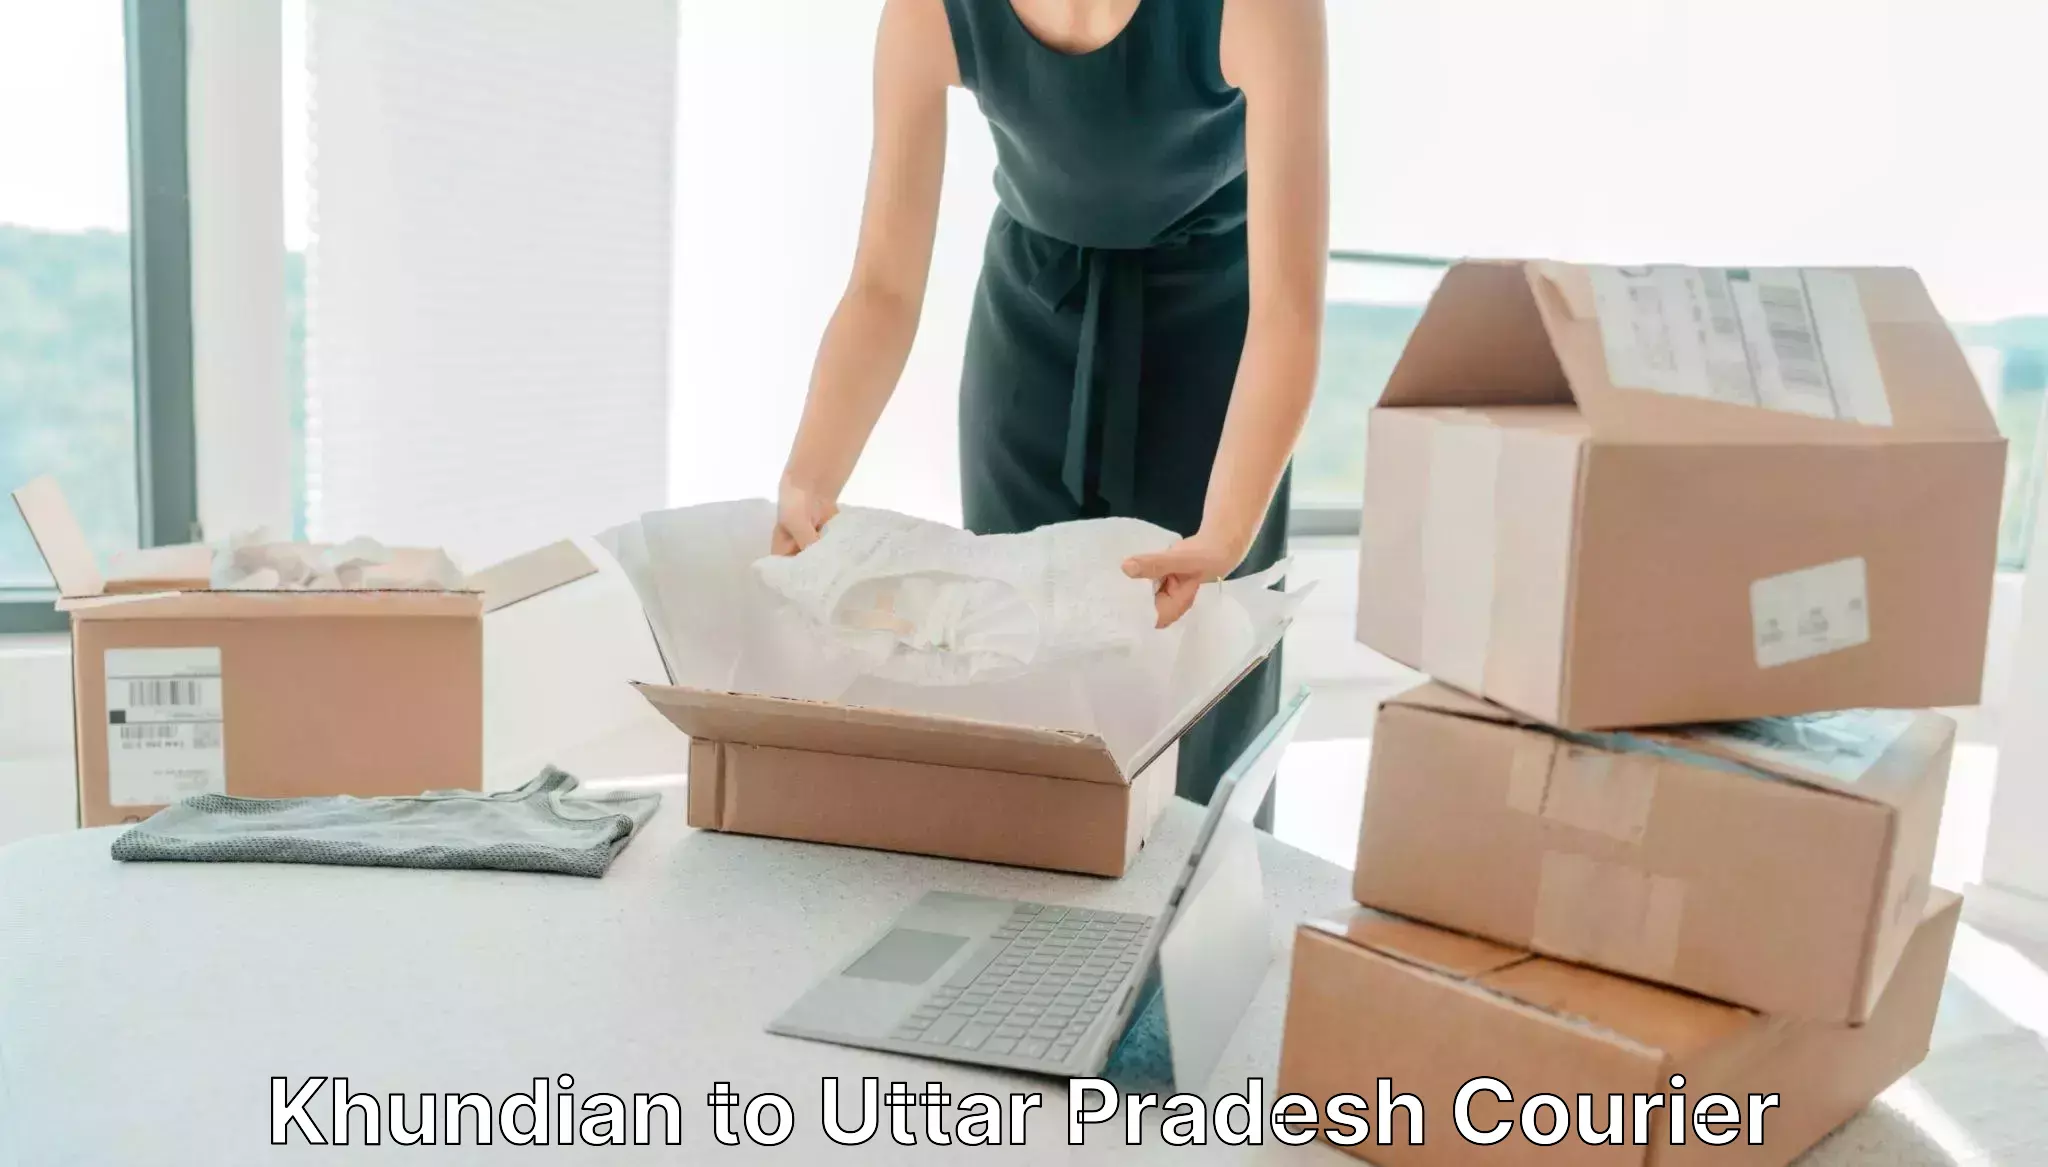 Logistics service provider Khundian to Uttar Pradesh